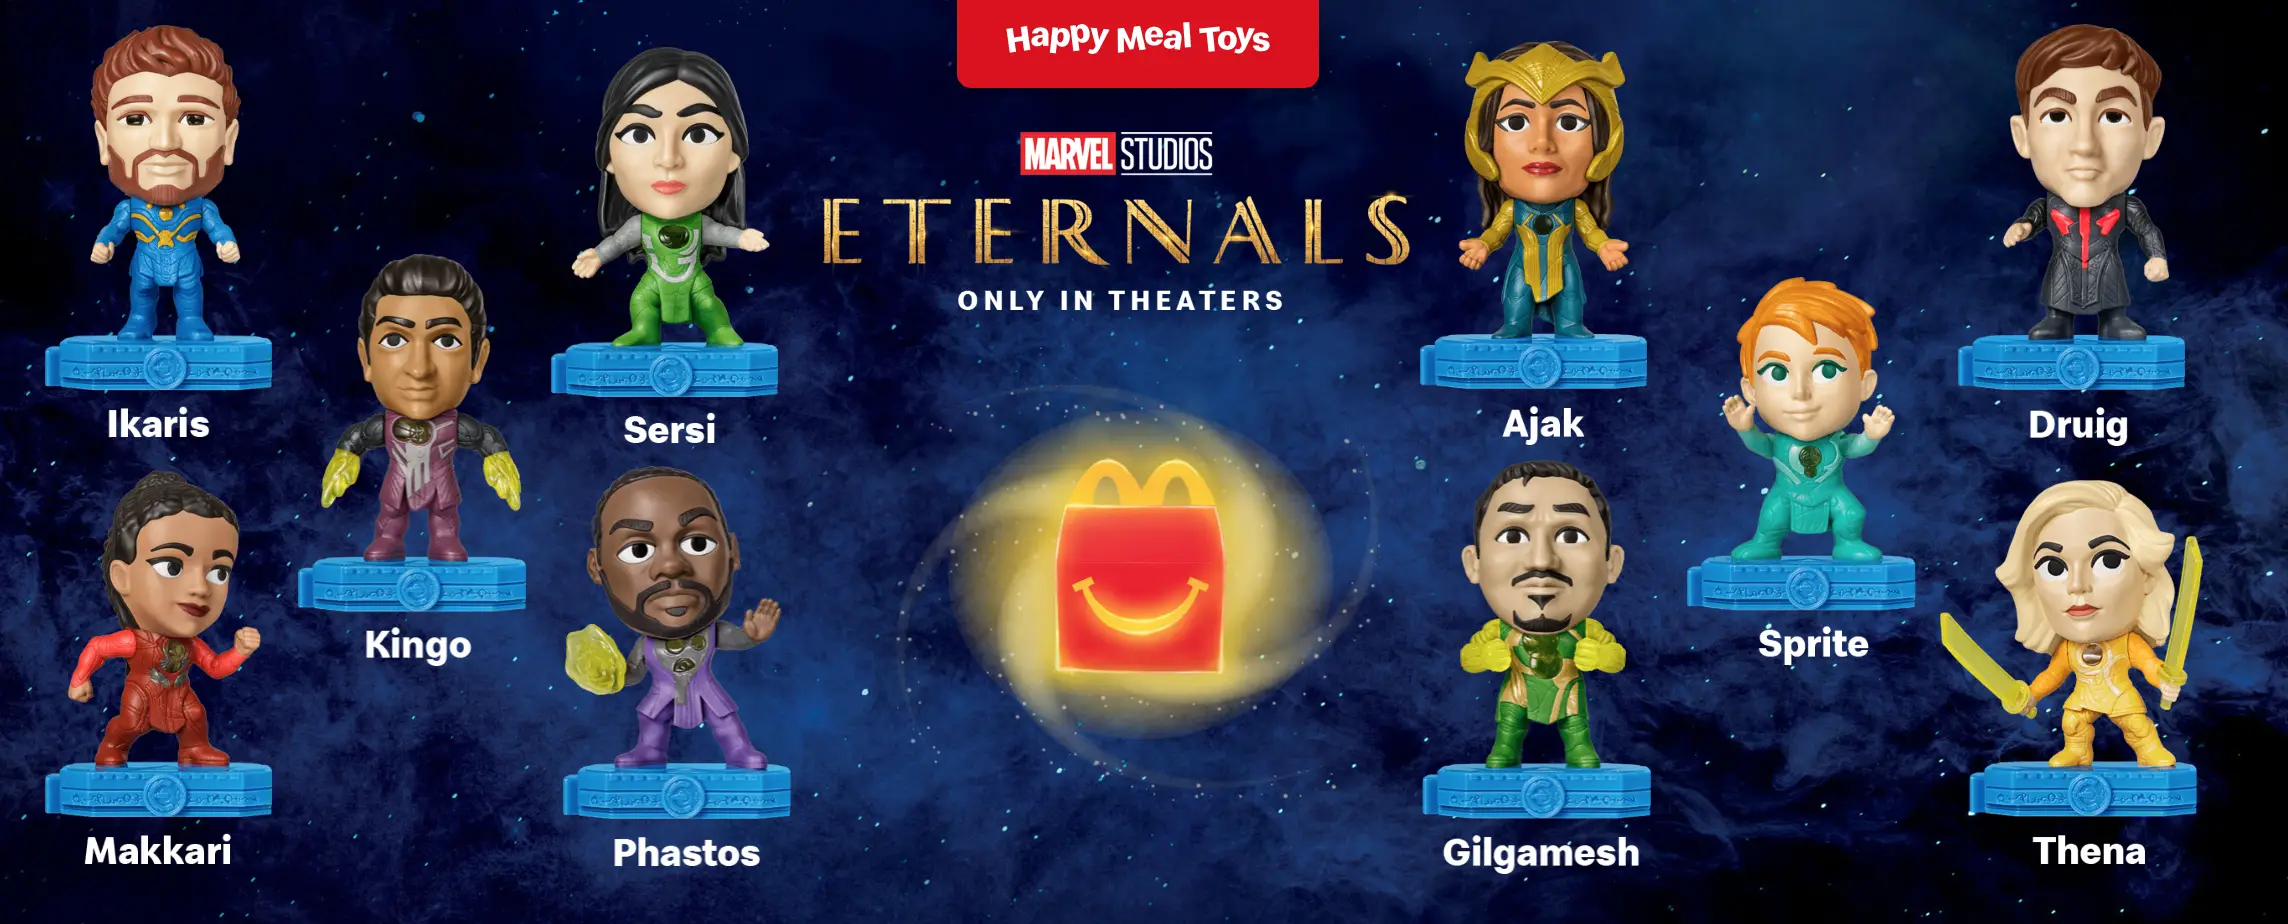 McDonald's Eternals Toys